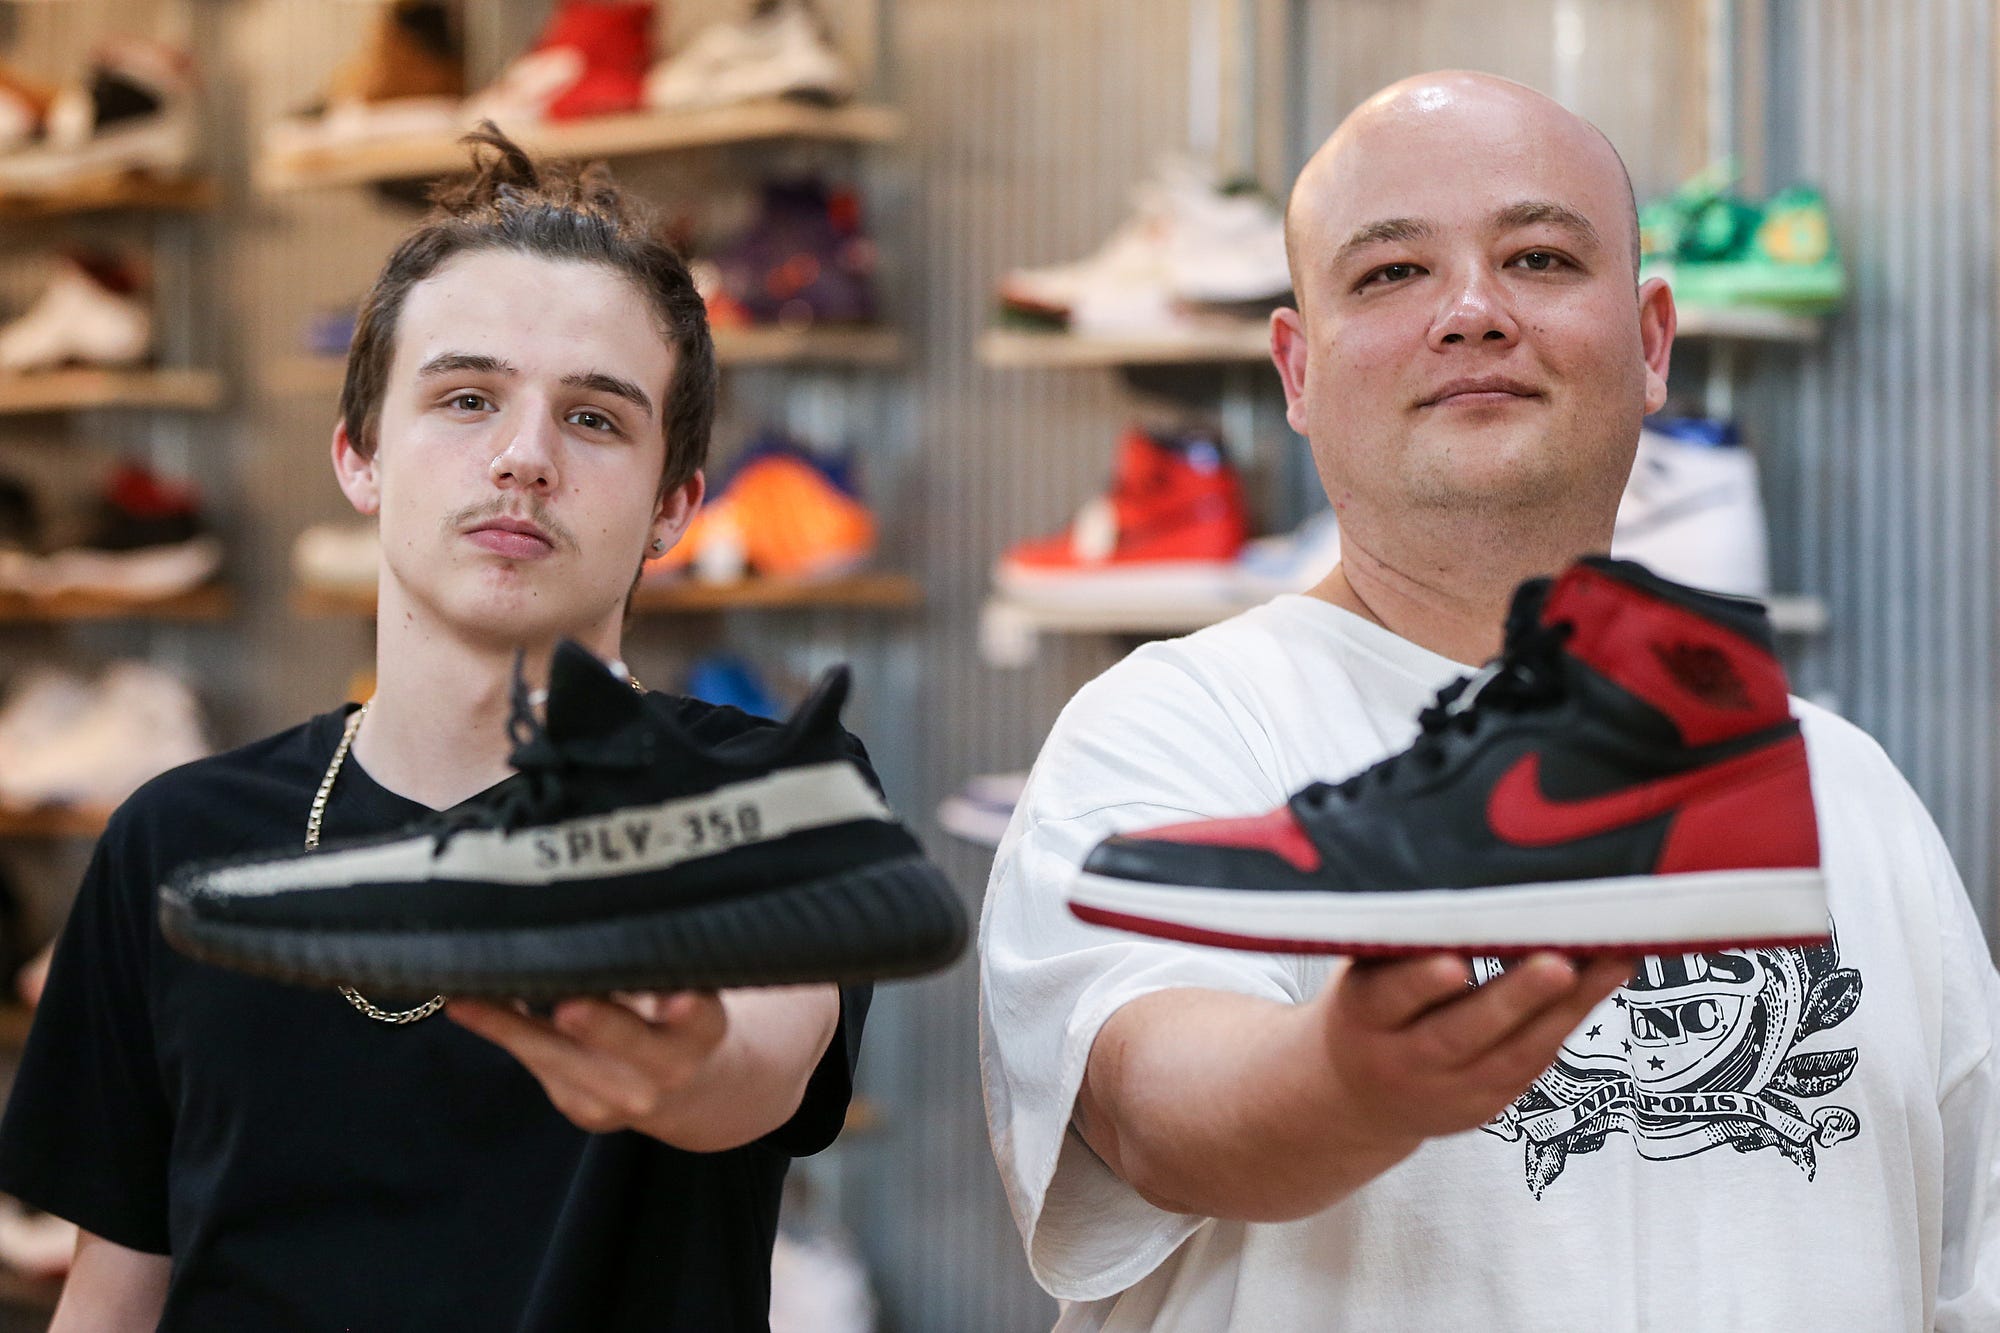 selling rare Air Jordan, Yeezy shoes